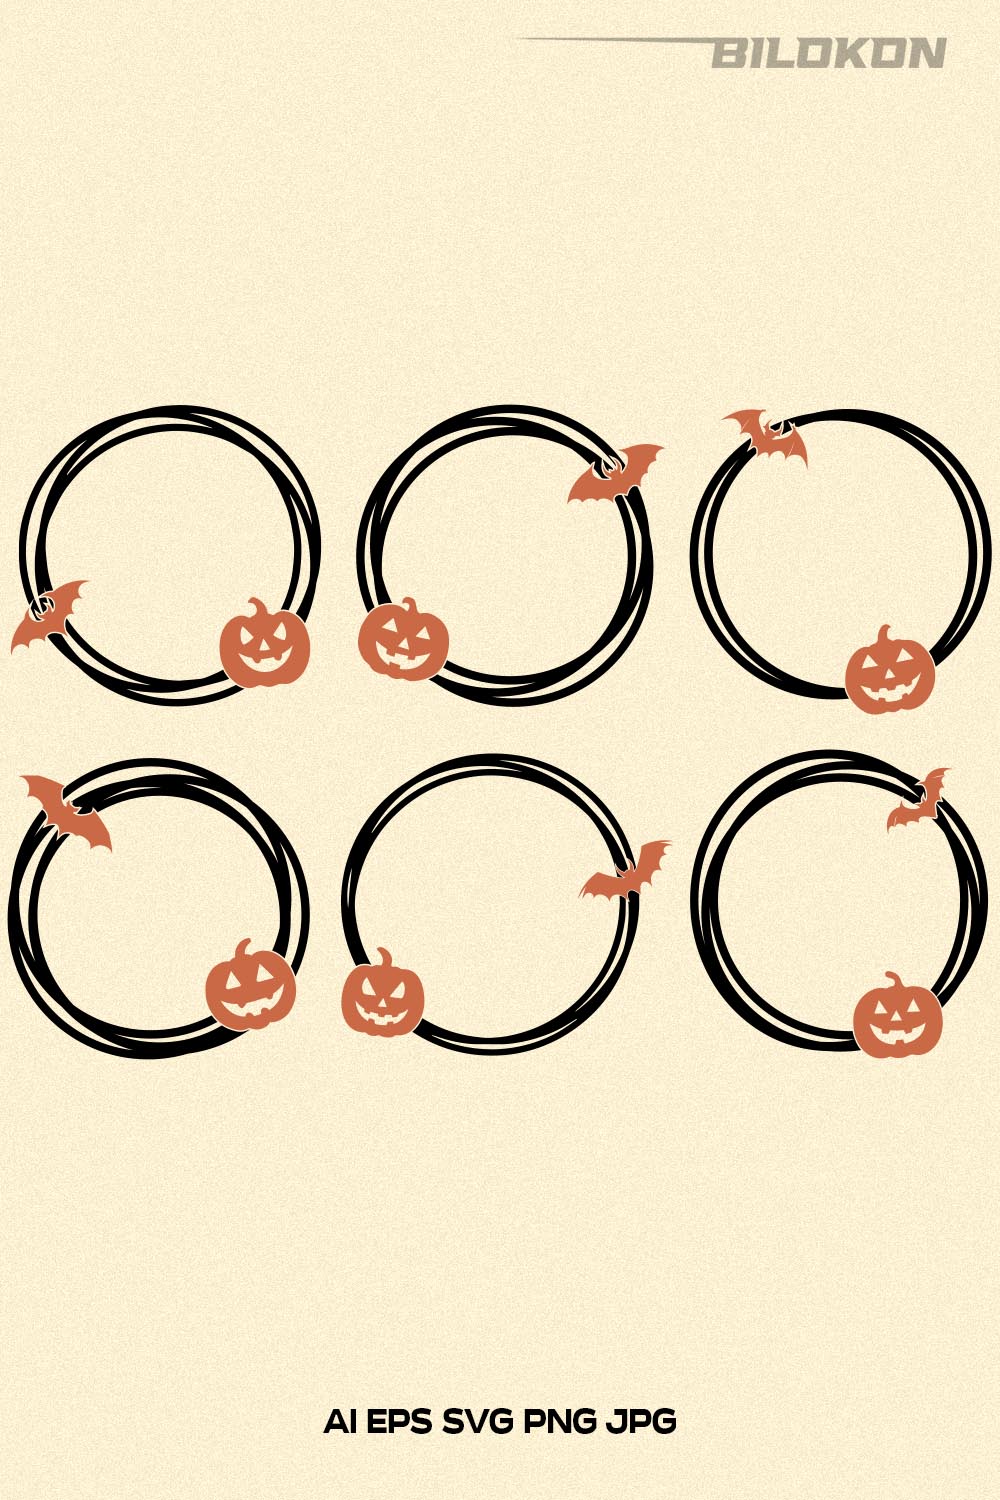 Halloween Double Circle Frame set, Halloween SVG pinterest preview image.